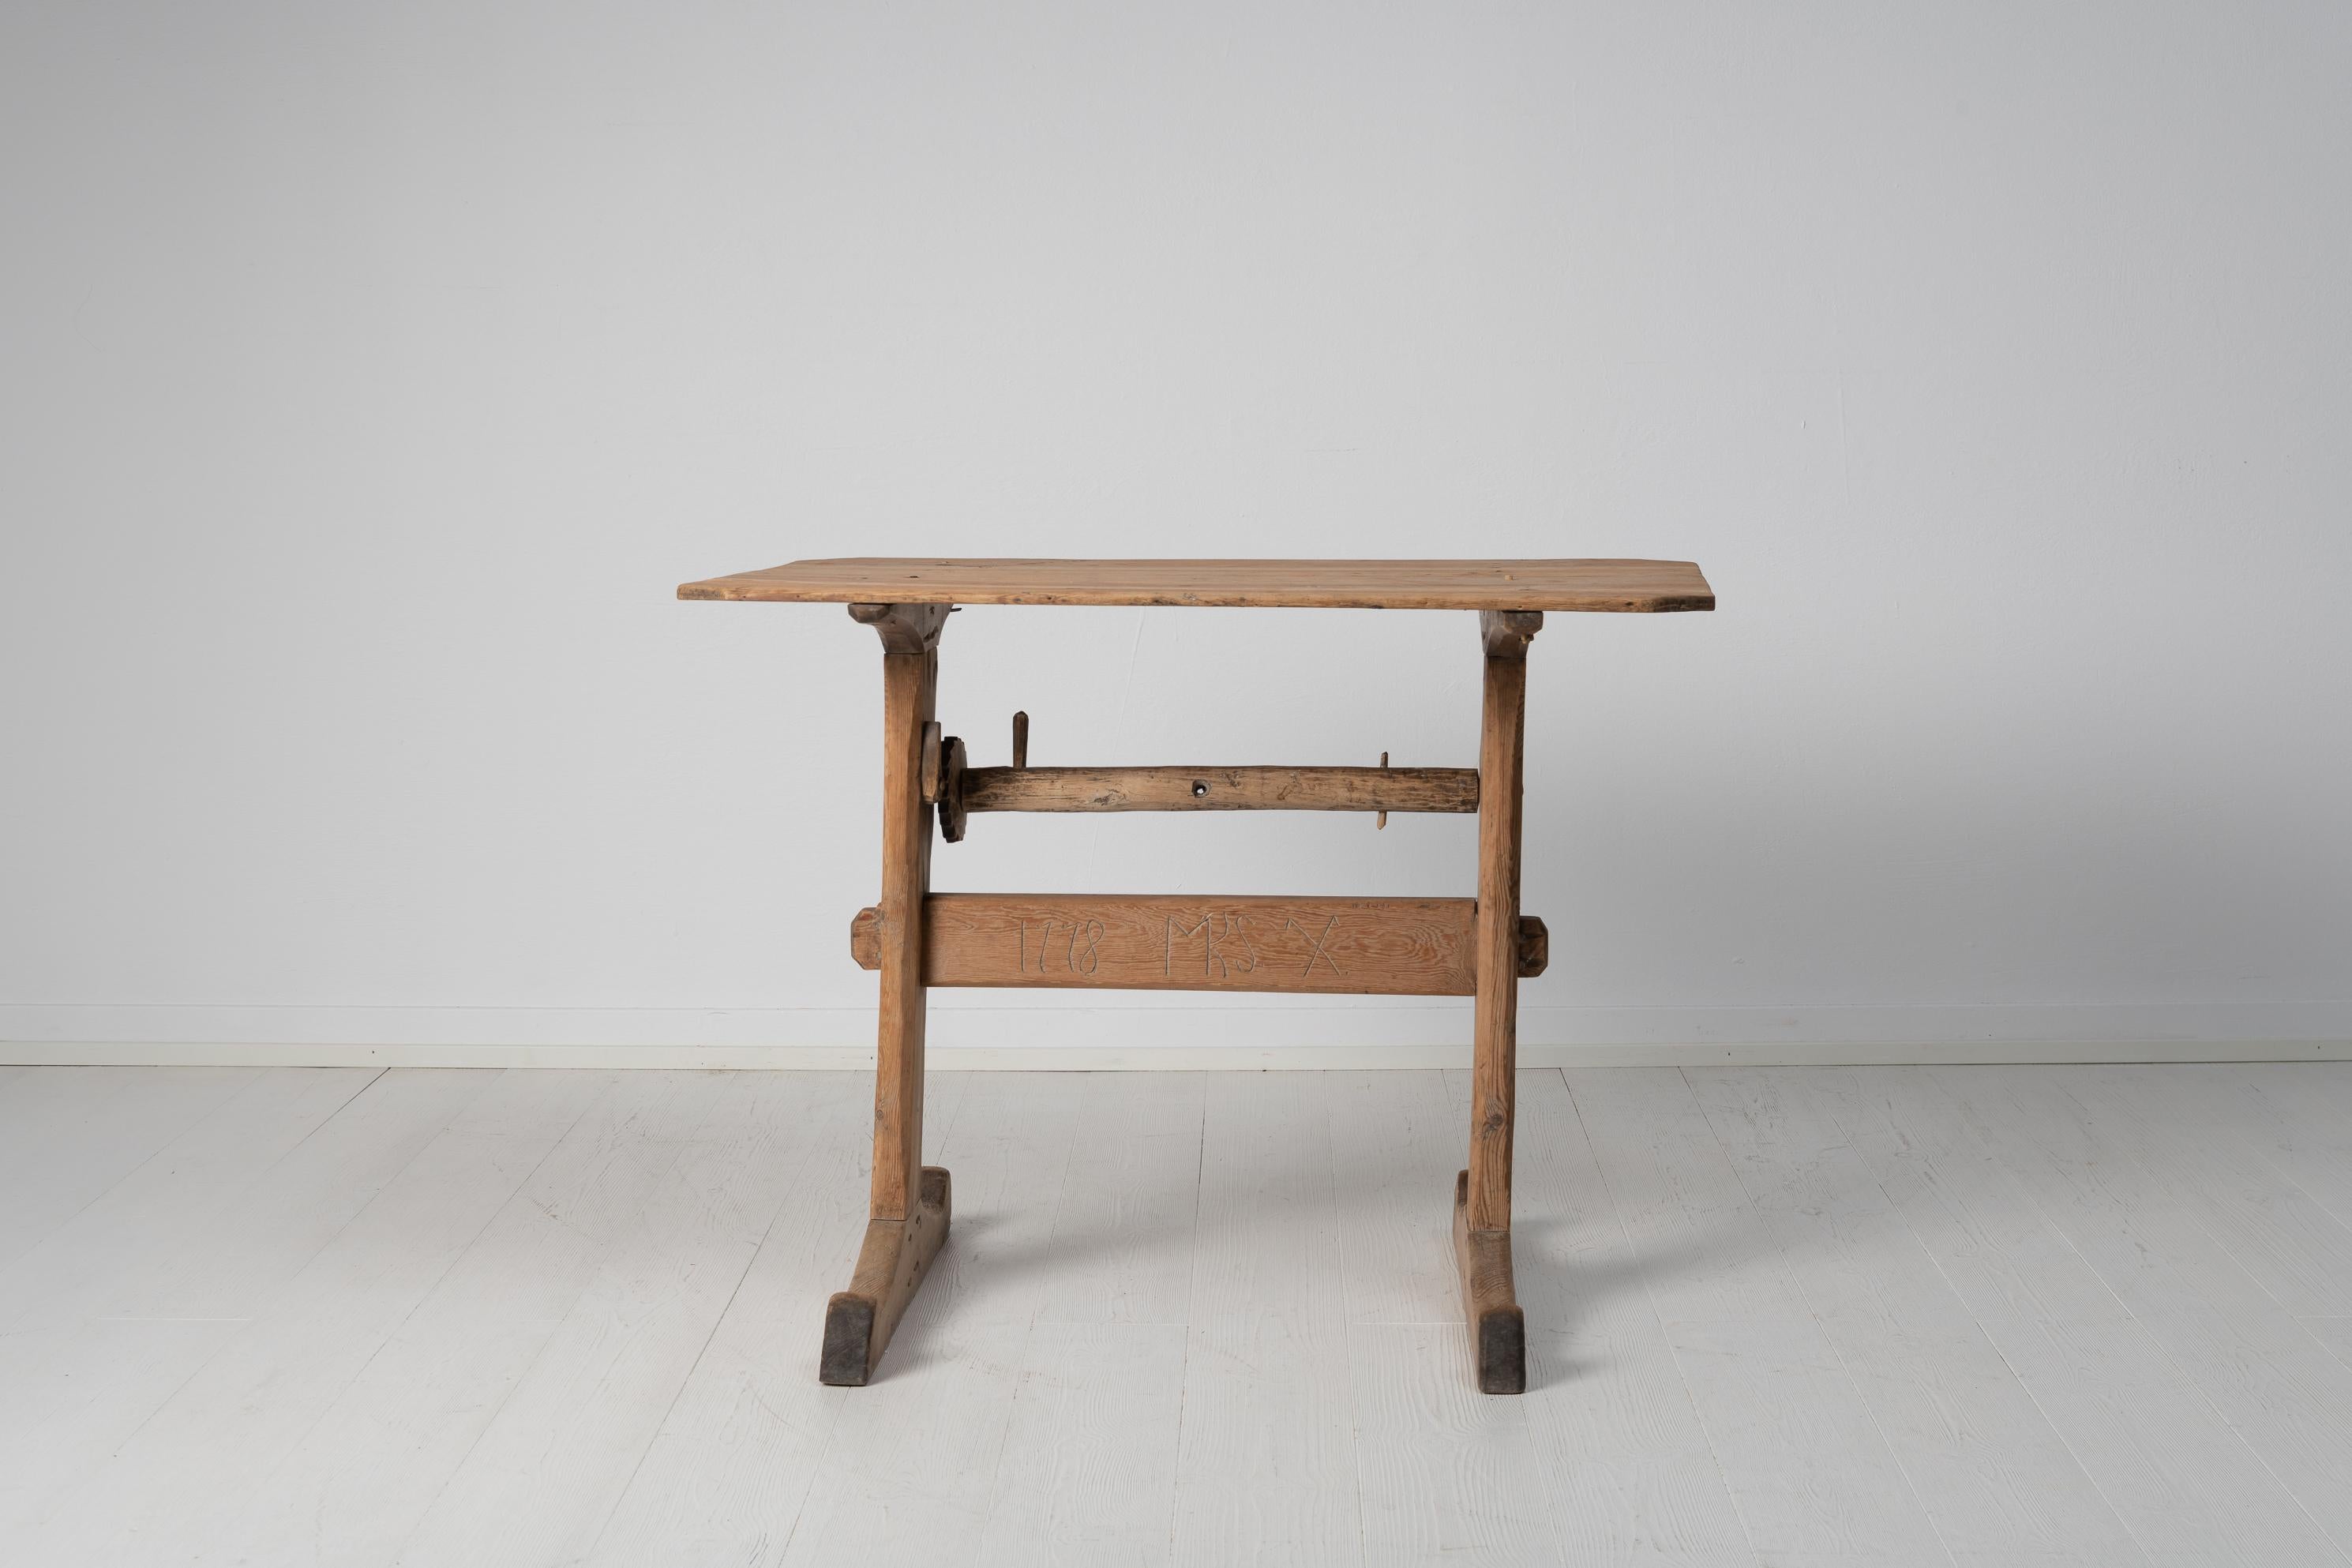 Hand-Crafted 18th Century, Small Swedish Folk Art Table